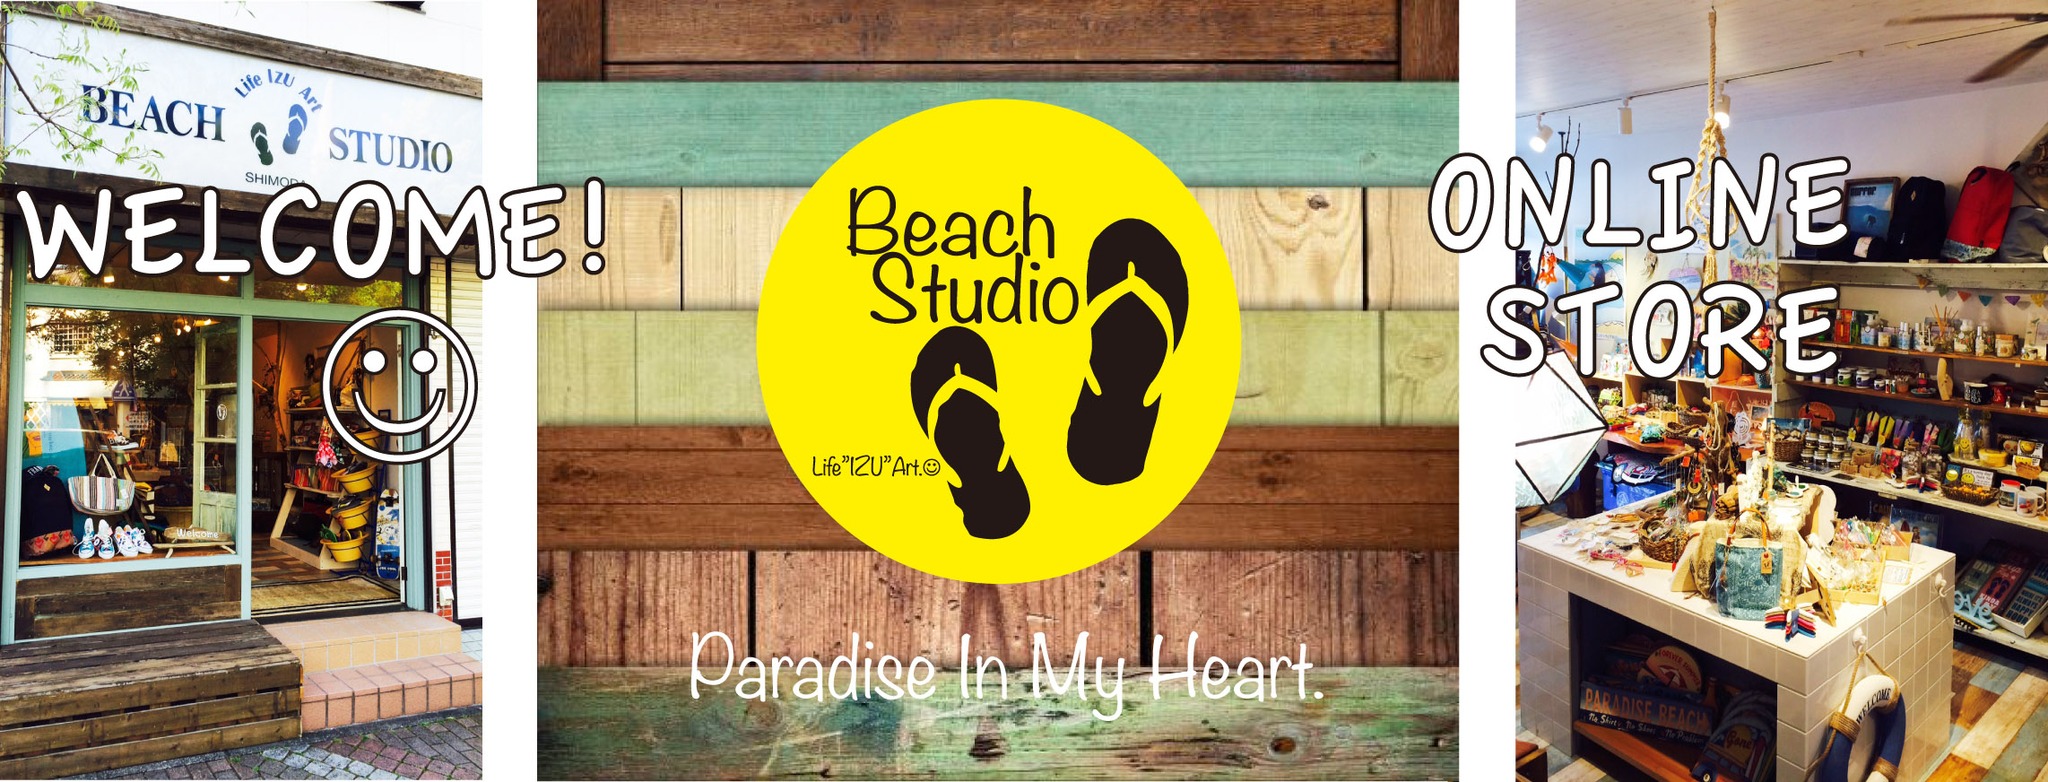 Beach Studio